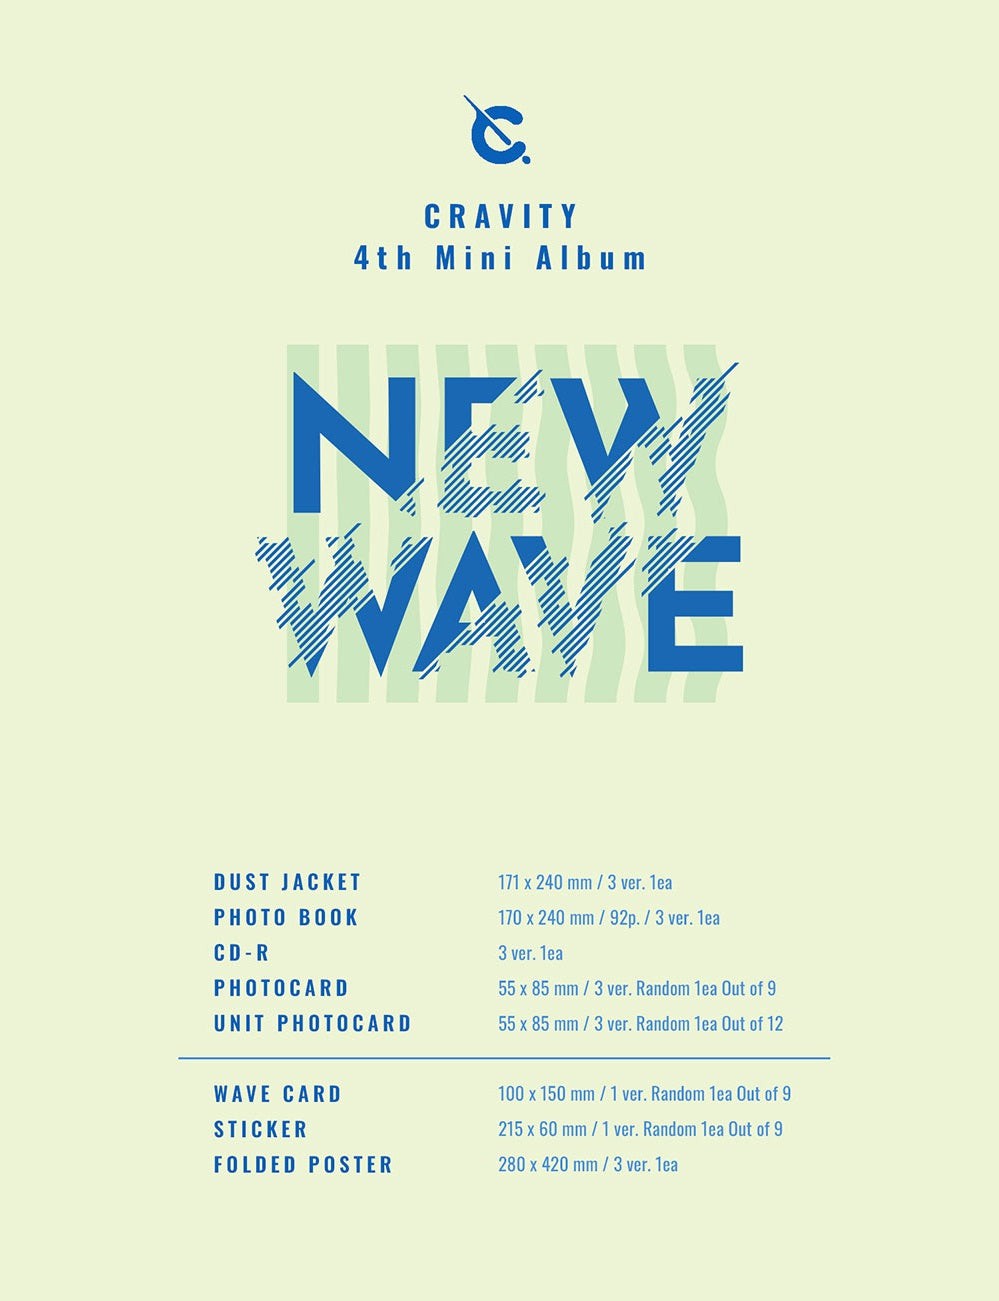 Cravity - New Wave